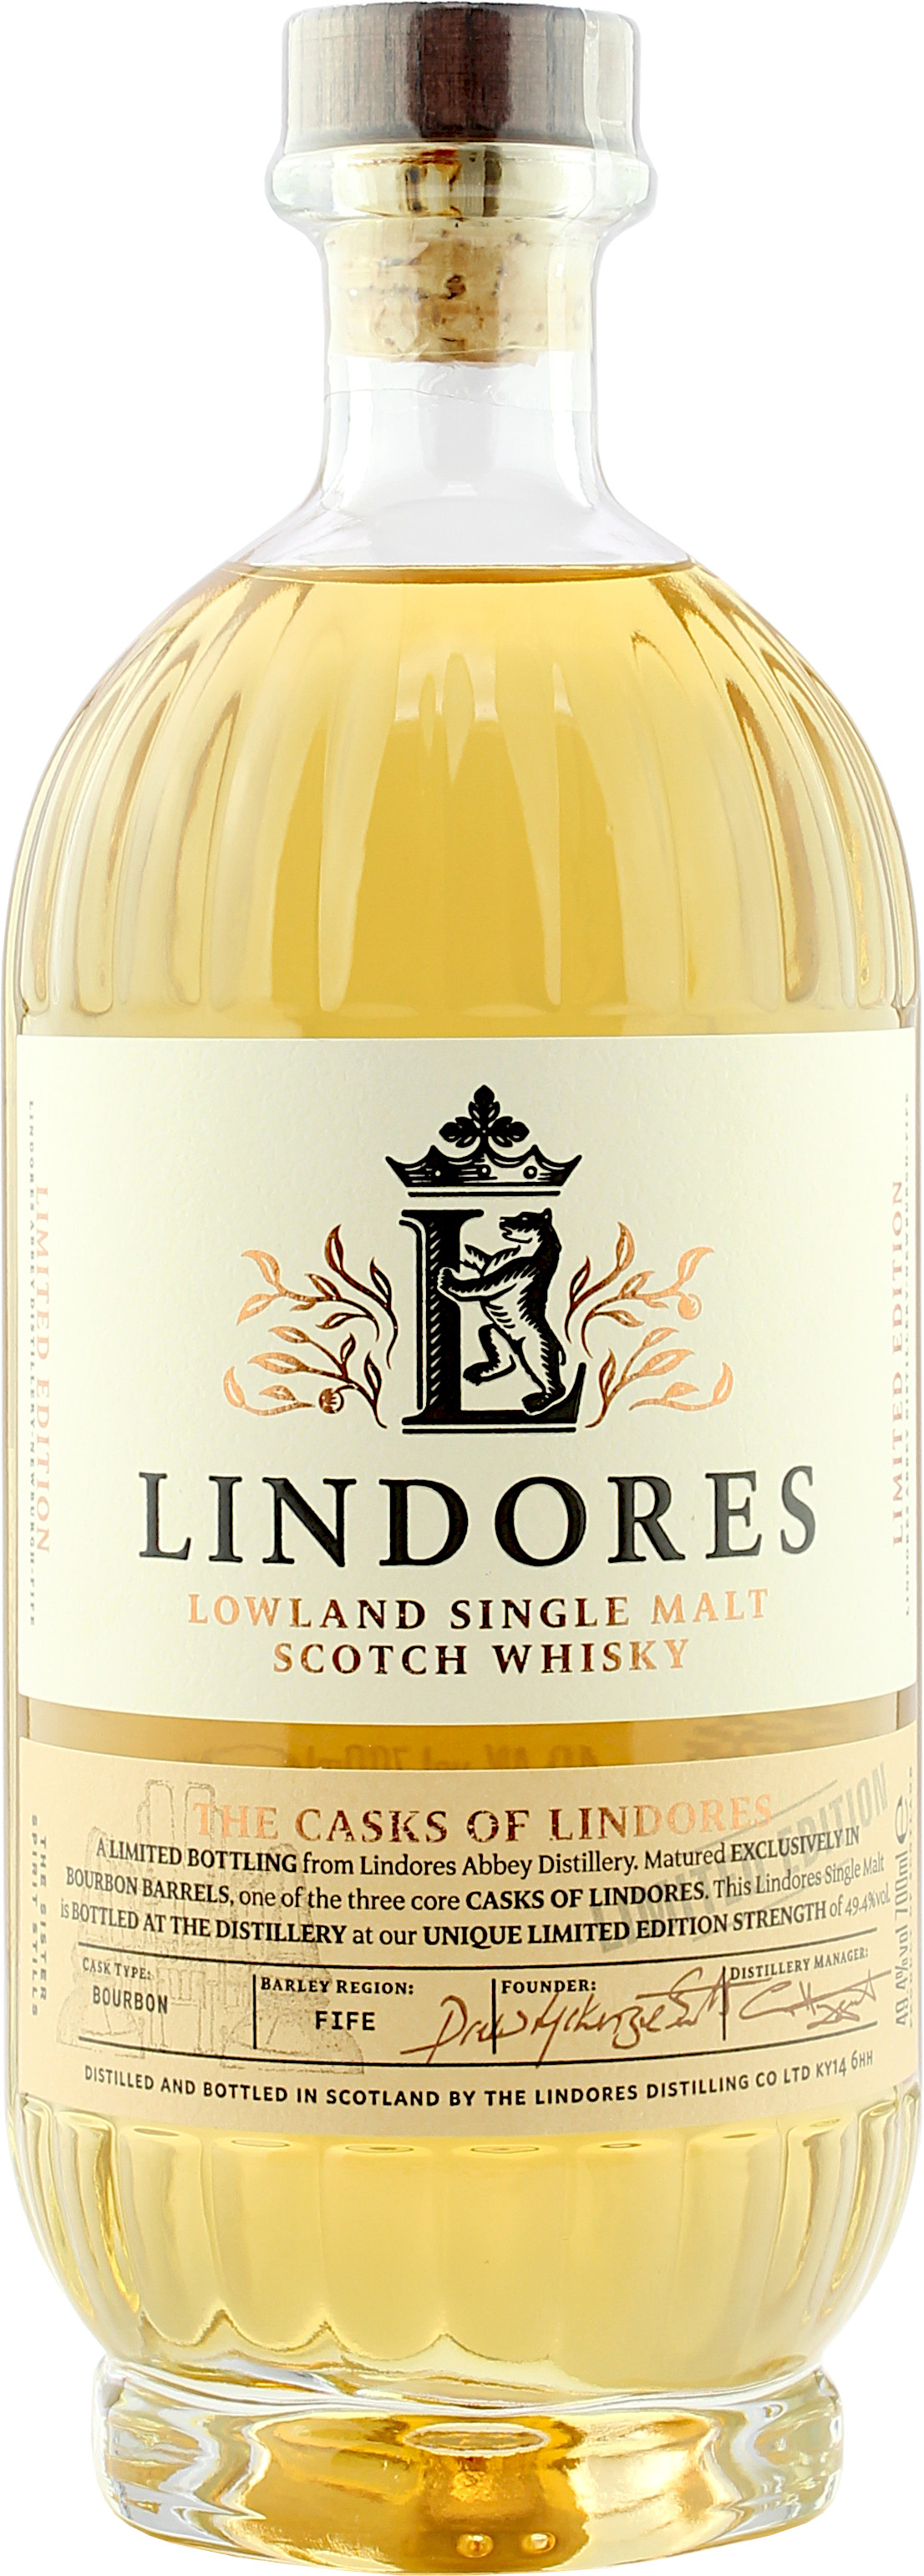 Lindores The Casks of Lindores Bourbon Casks 49.4% 0,7l